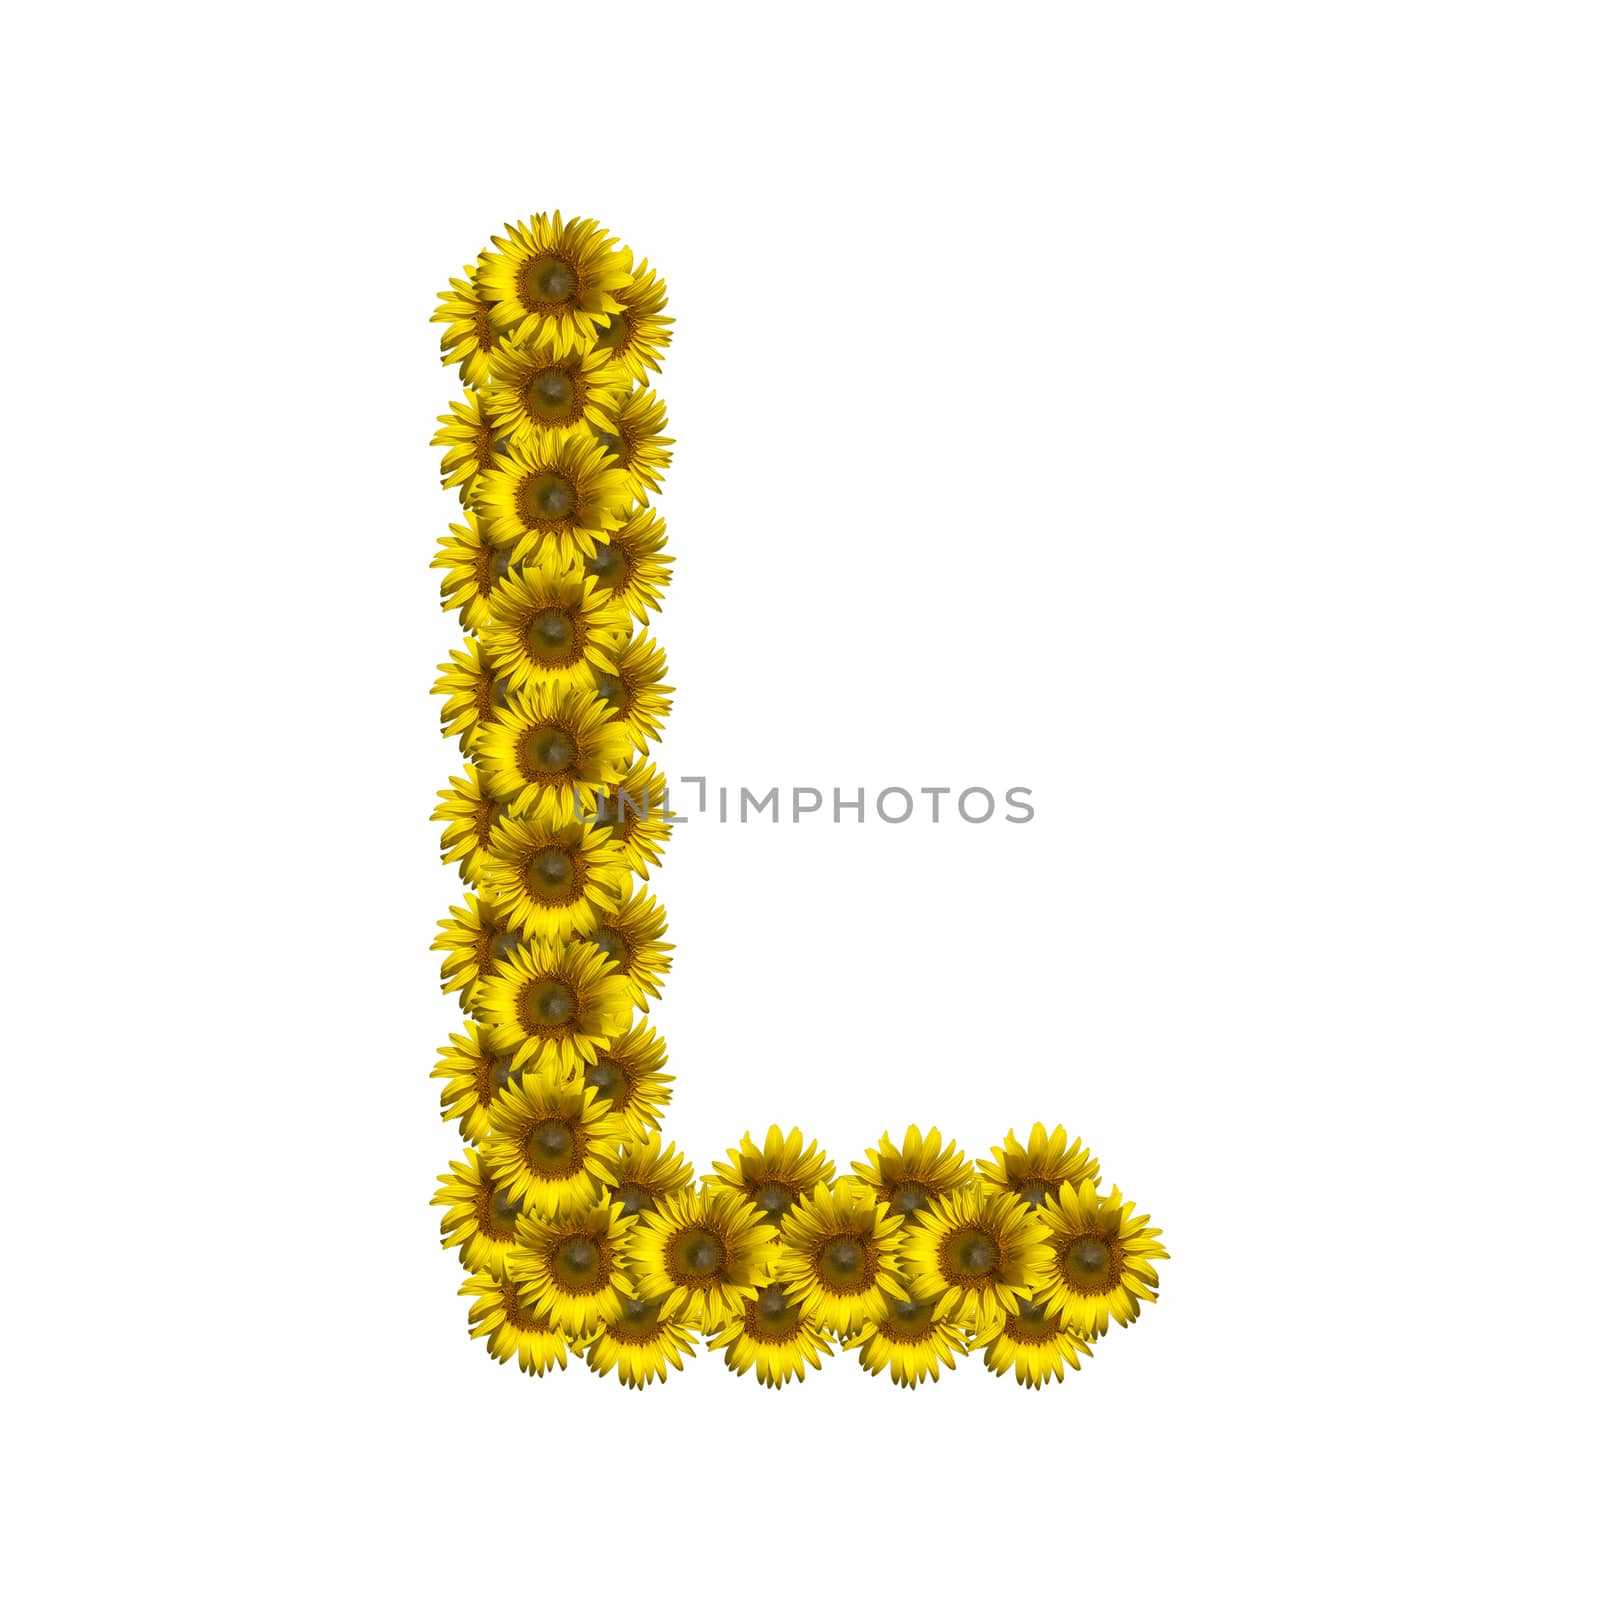 Sunflower alphabet isolated on white background, letter L